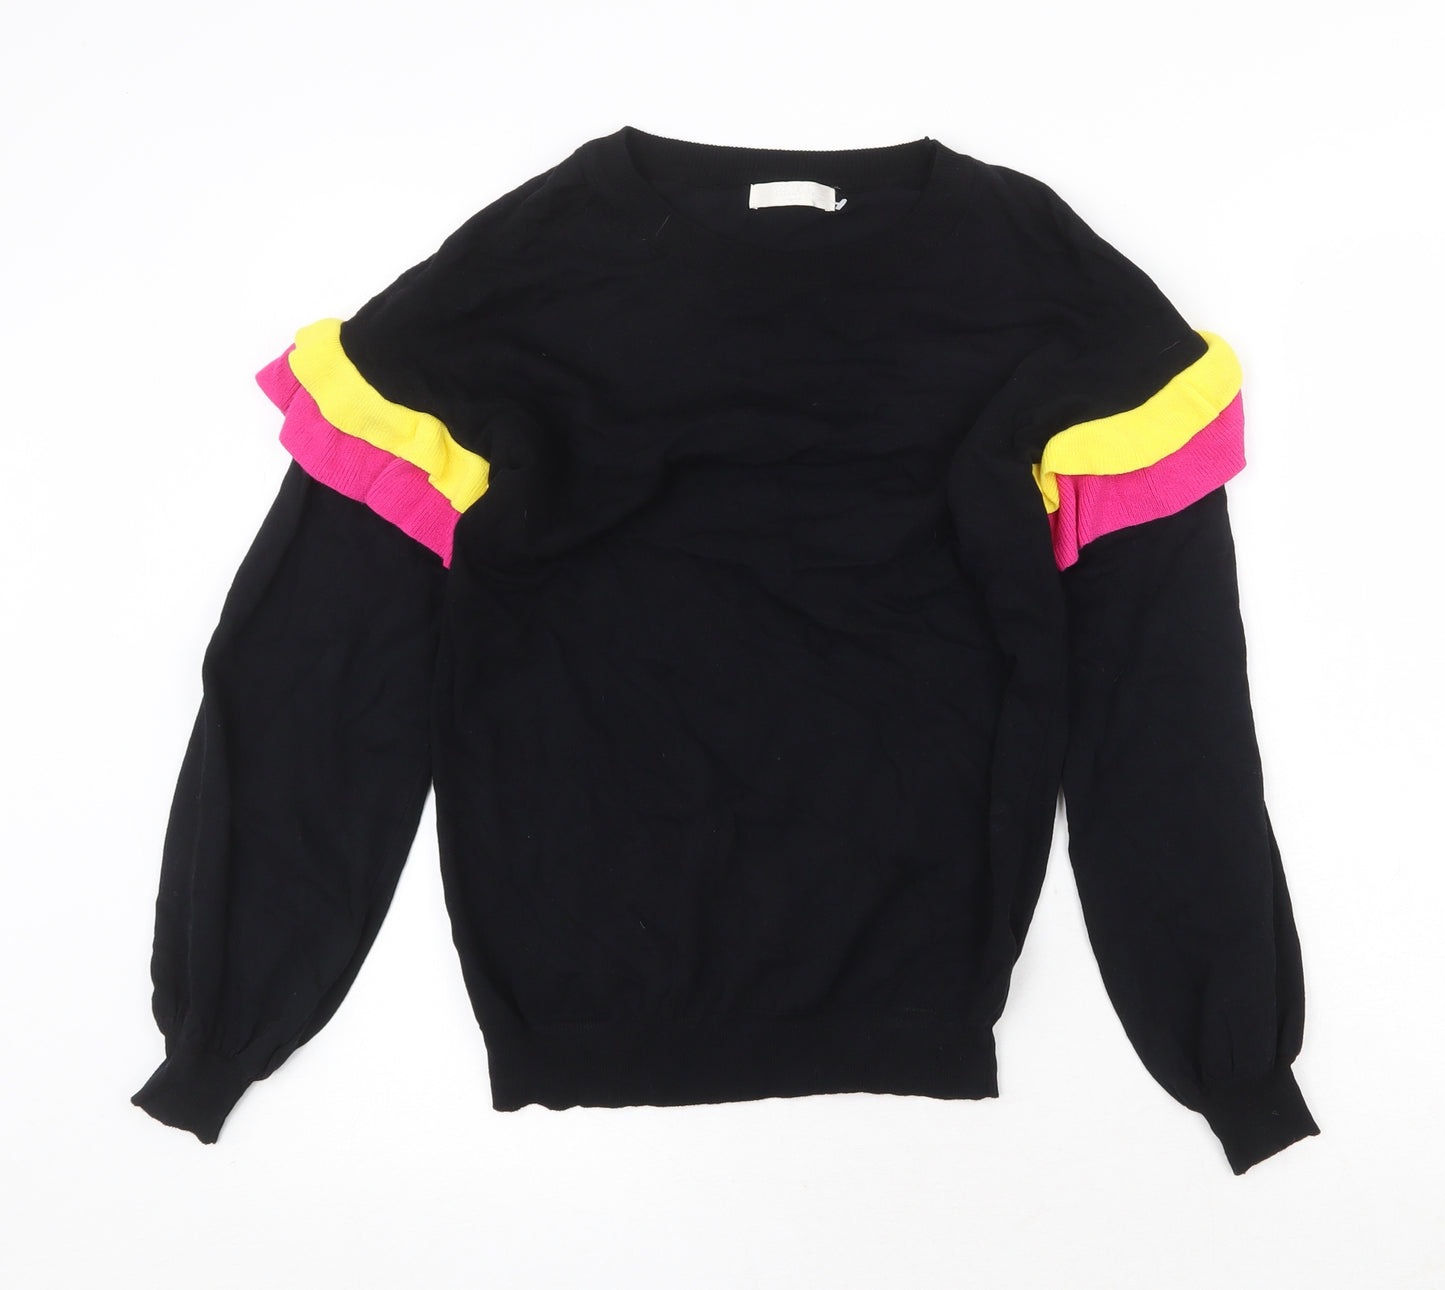 Nicole Womens Black Polyester Pullover Sweatshirt Size M Pullover - Multicoloured Frill